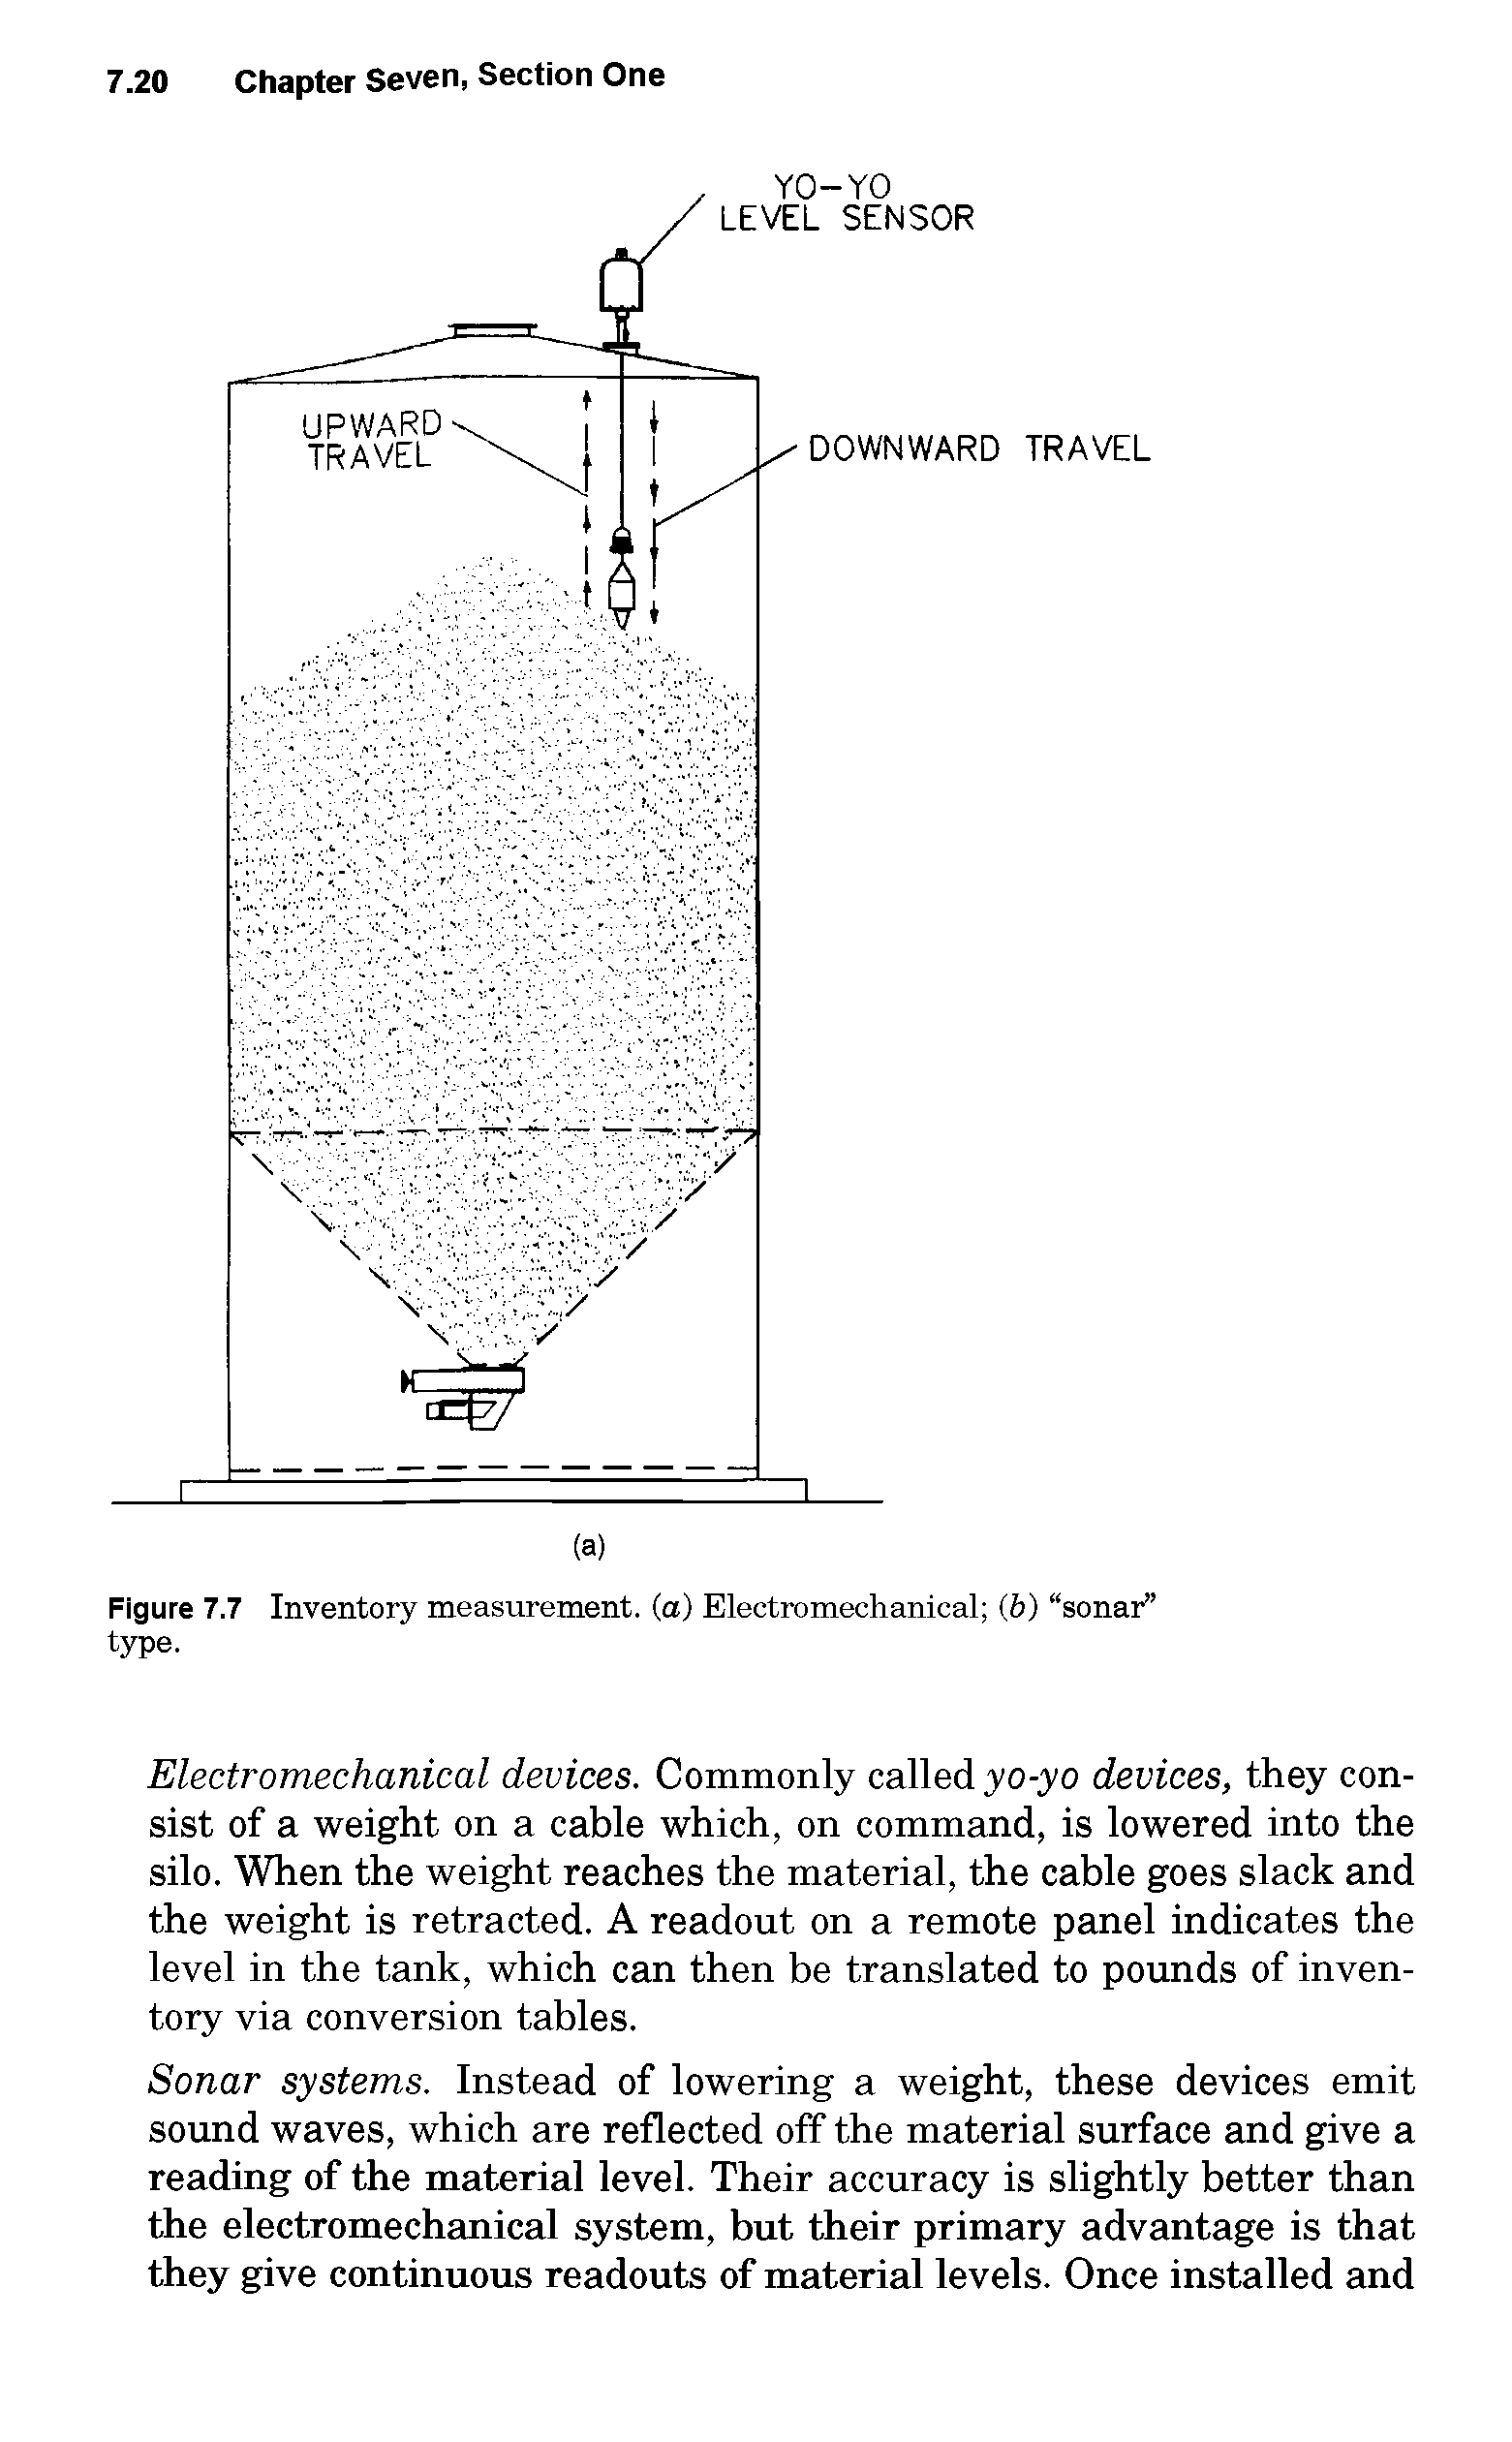 Figure 7.7 Inventory measurement, (a) Electromechanical (i>) sonar type.